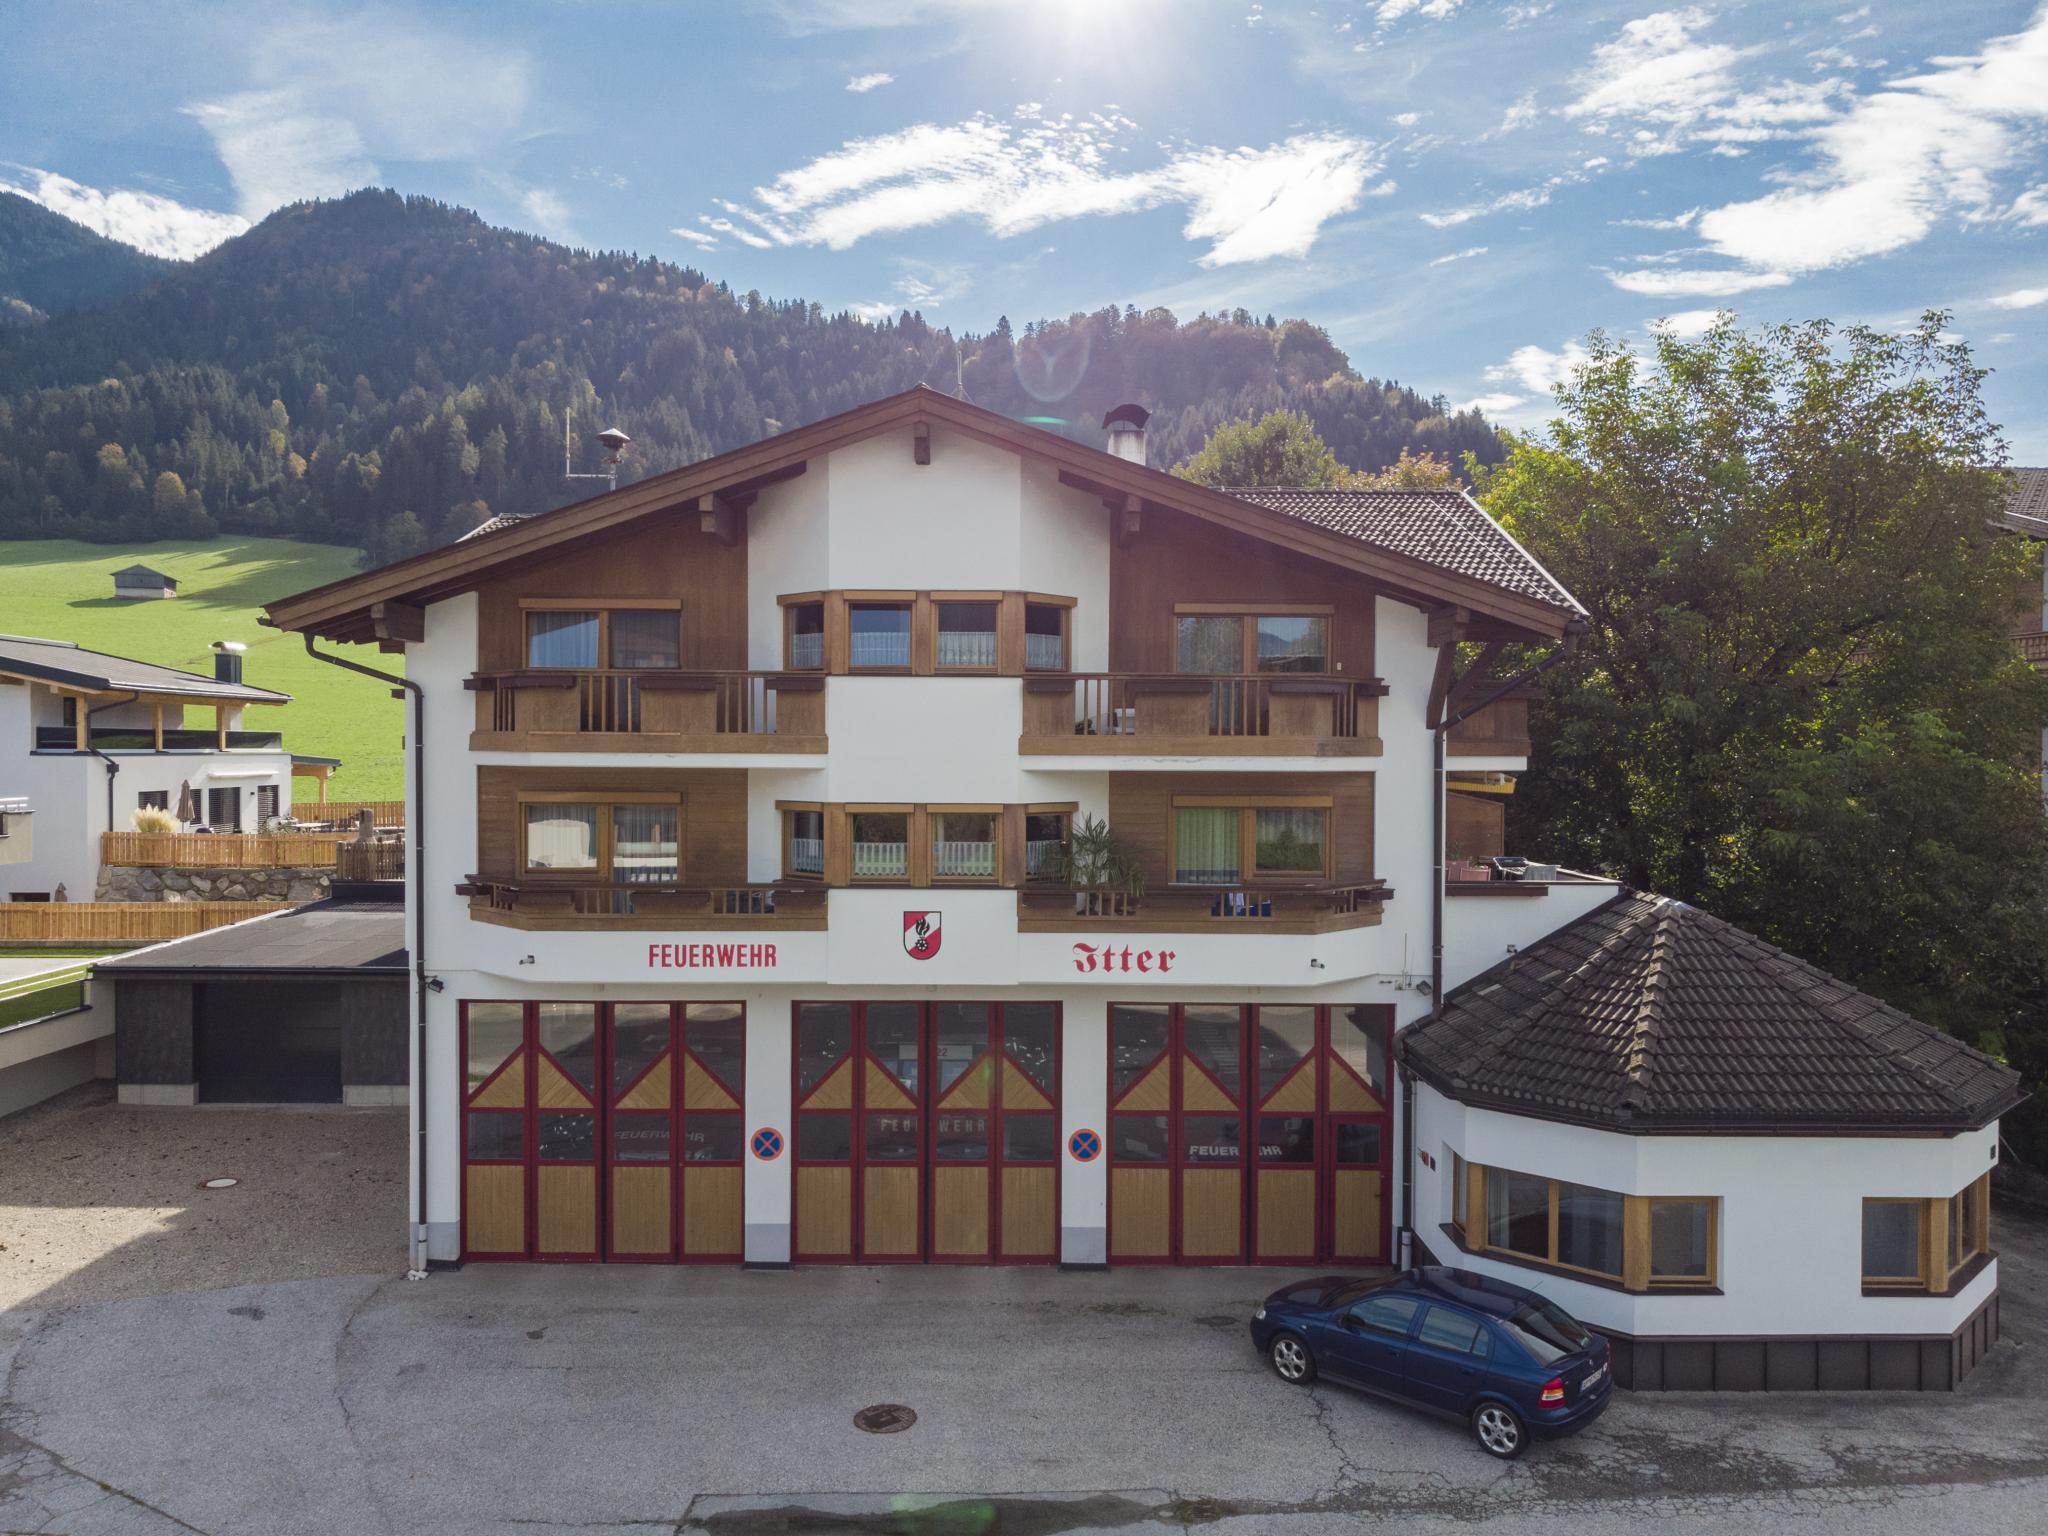 Itterblick Tirol